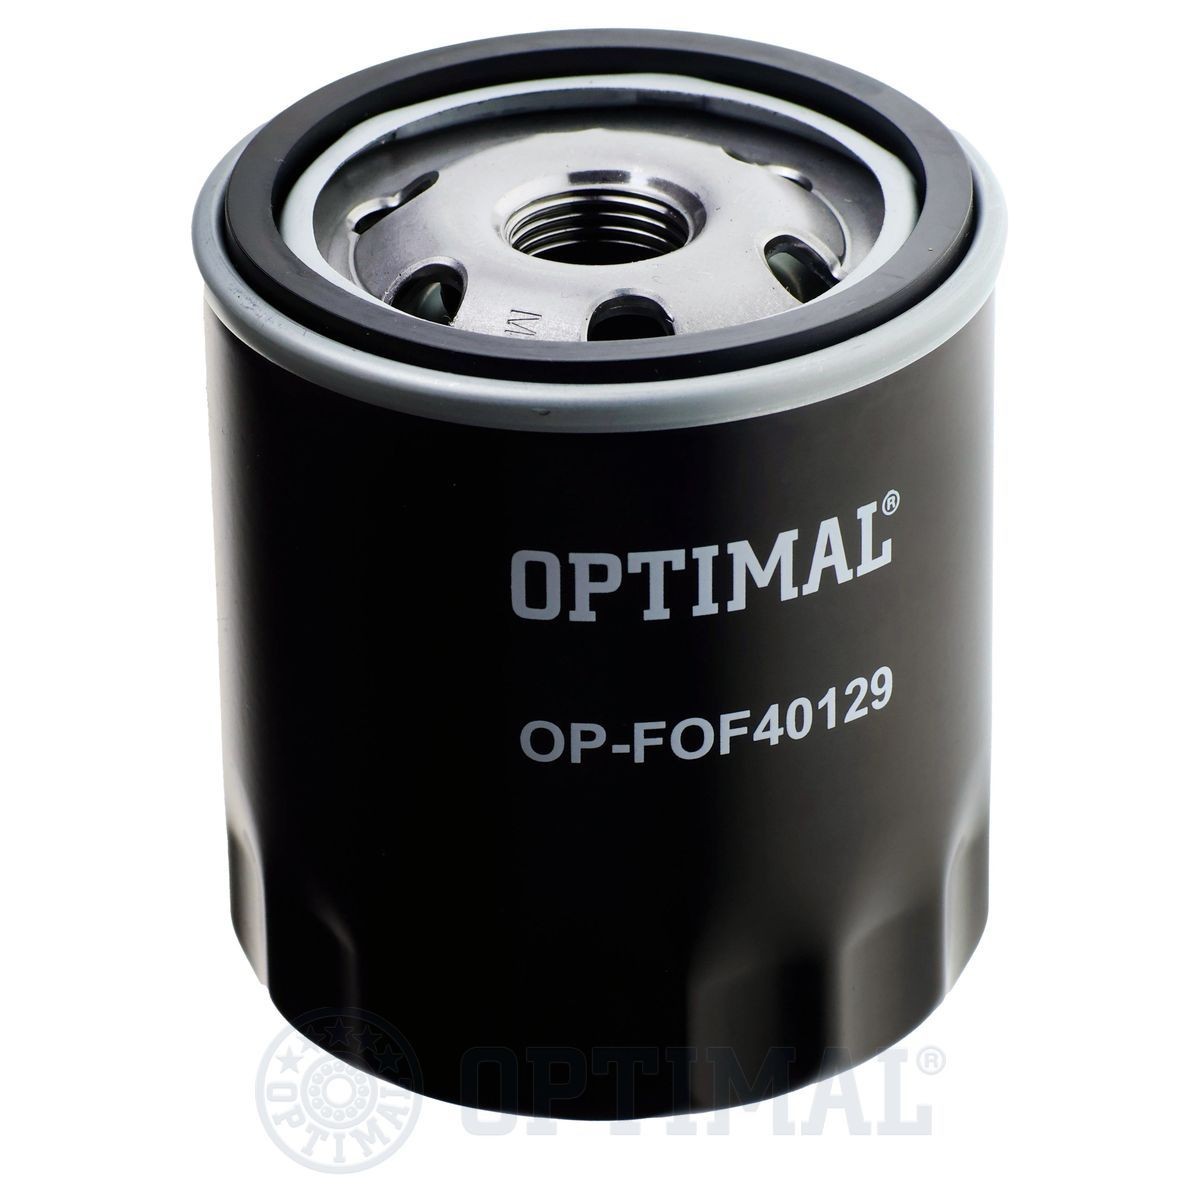 OPTIMAL OP-FOF40129 Oil filter 5009 285